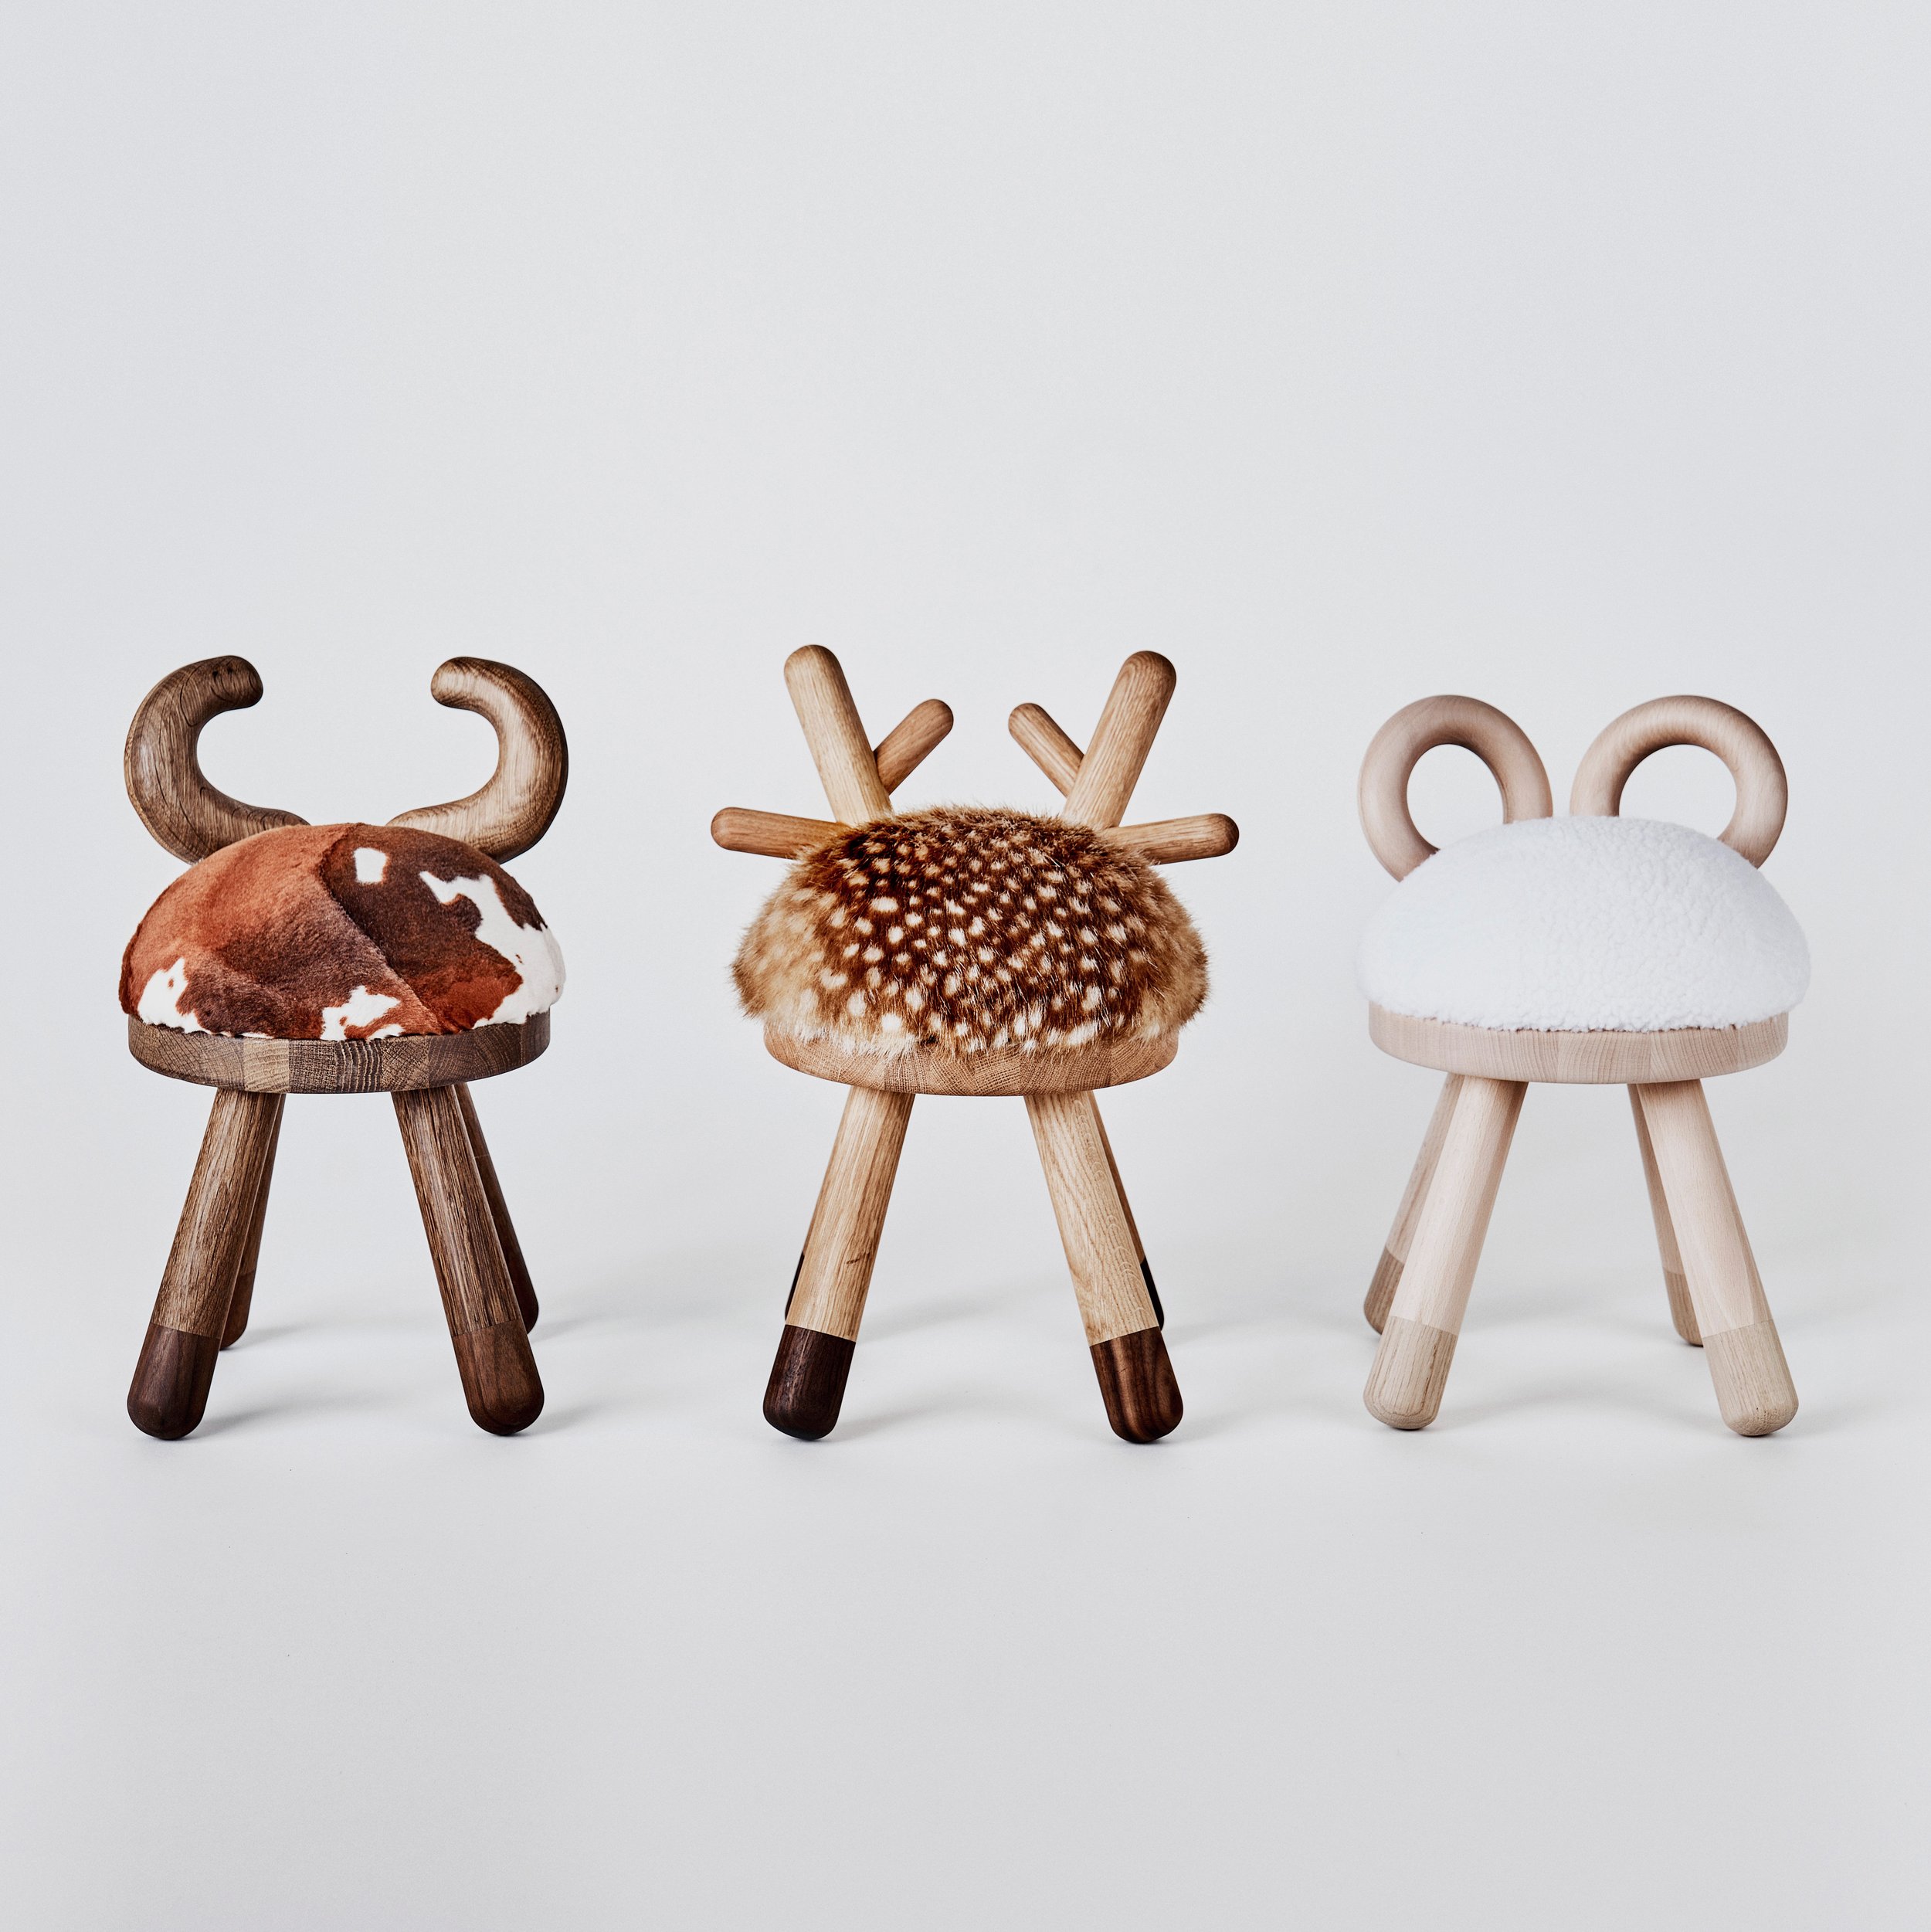 EO_Cow_Bambi_Sheep_Chairs_square.jpg